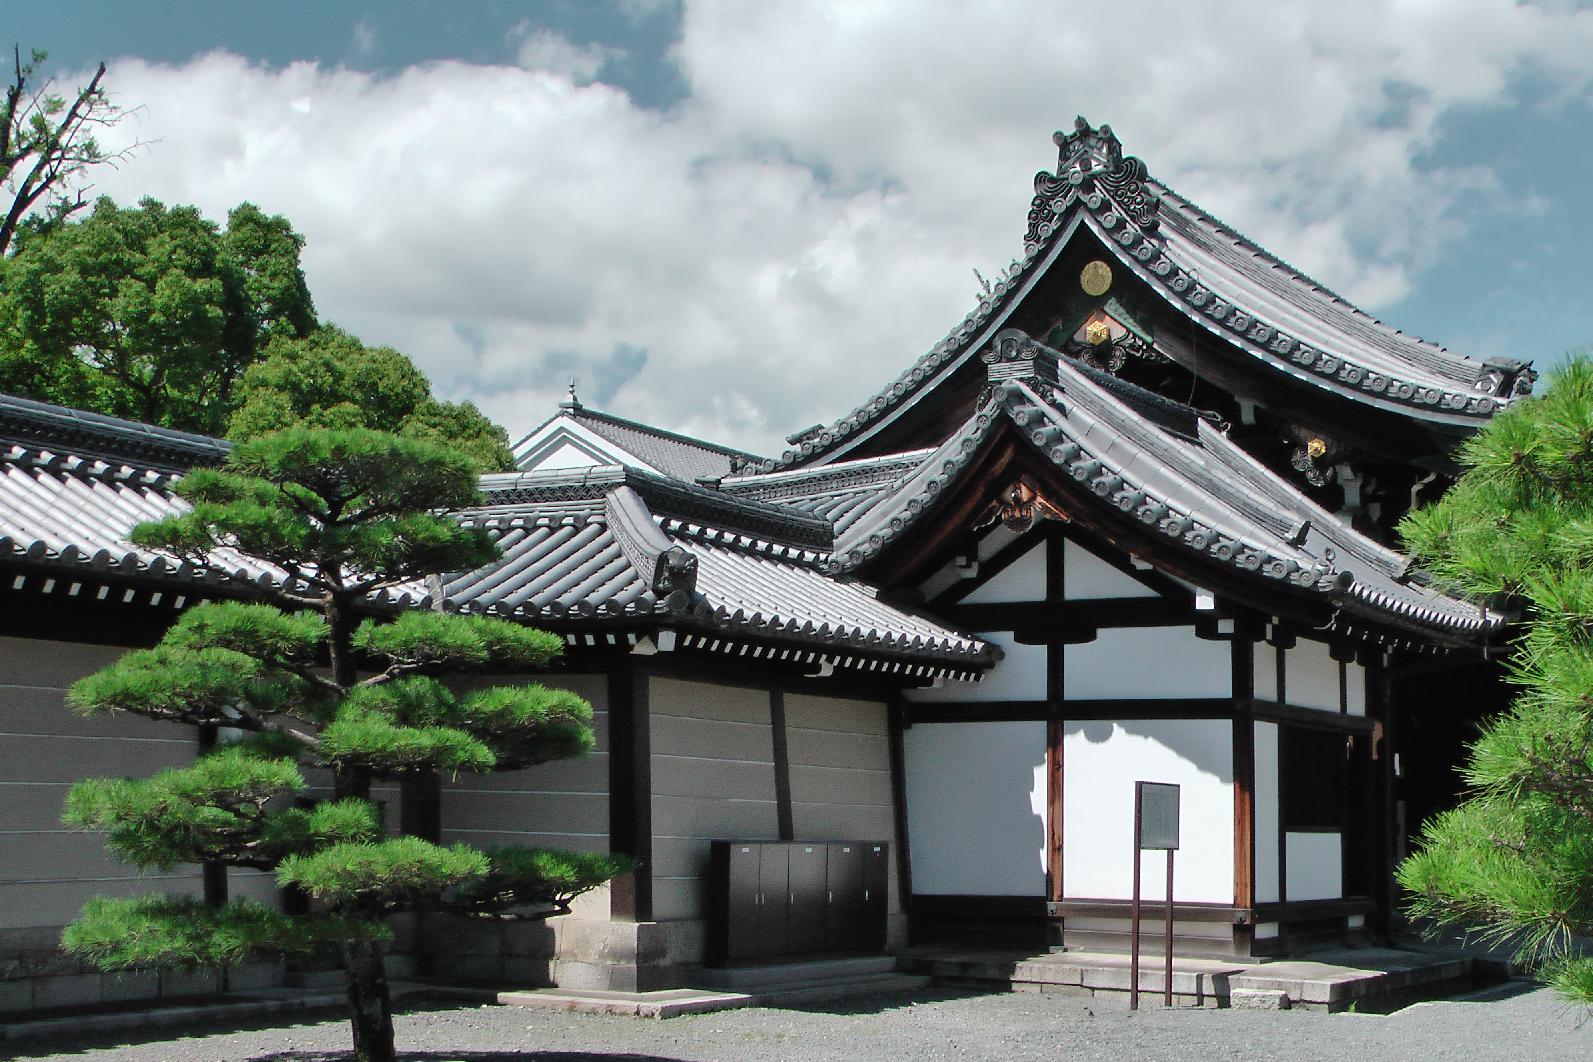 Nishi Hongan-ji Temple complex